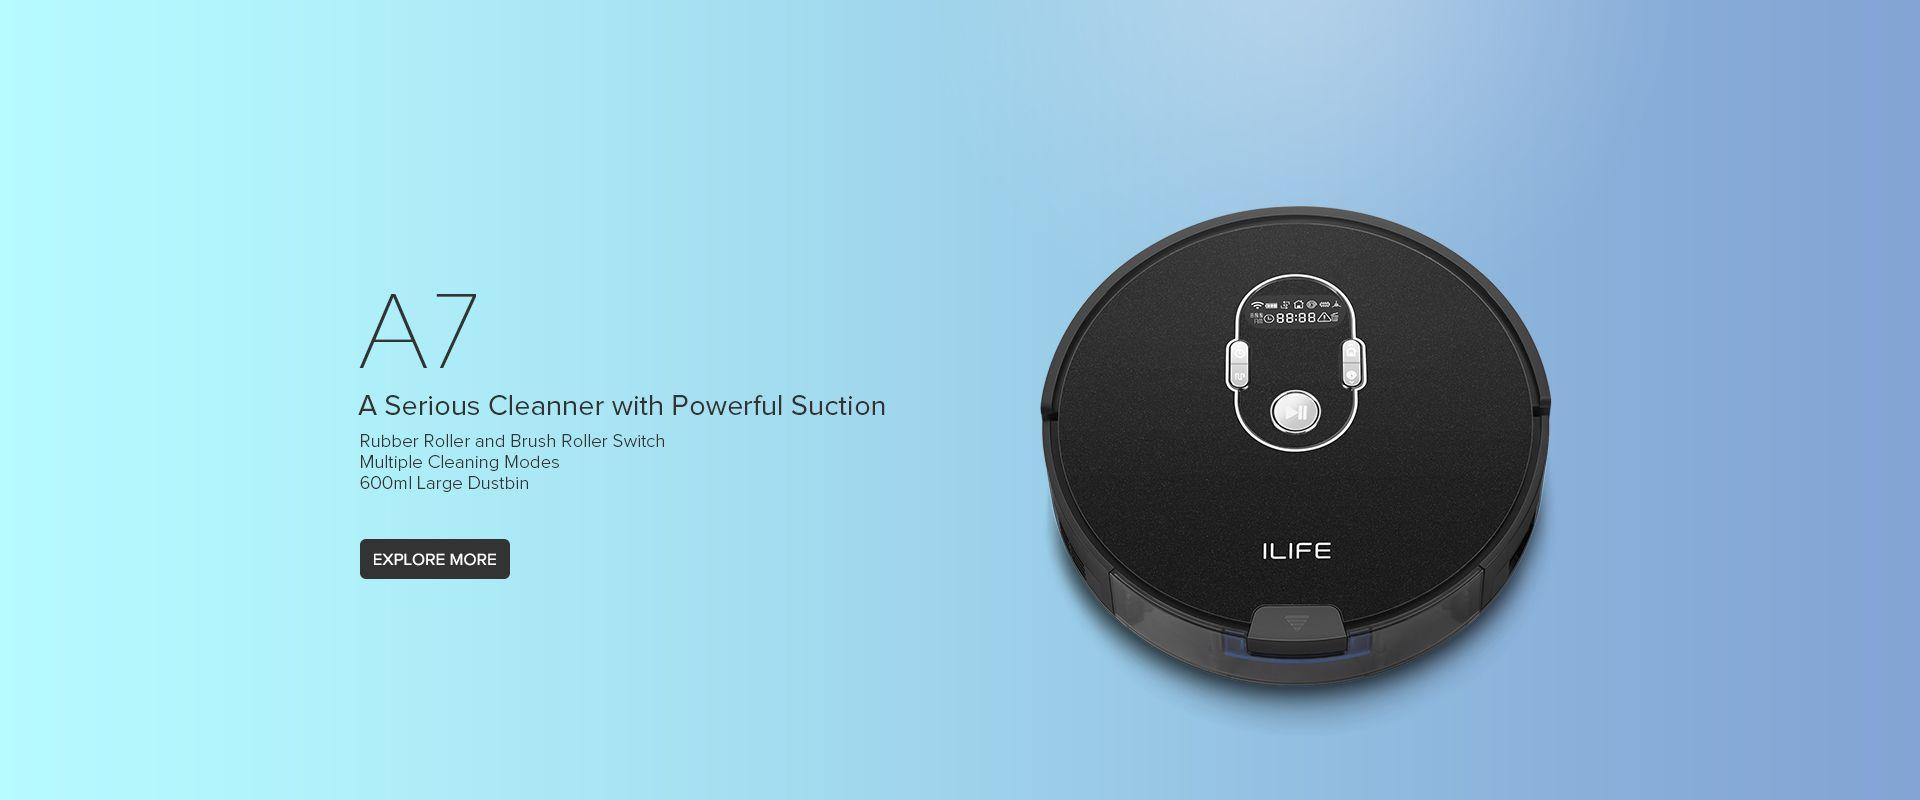 iLife Logo - ILIFE ROBOT | Robot Vacuum Cleaners | Smart Robotic Vacuums ...